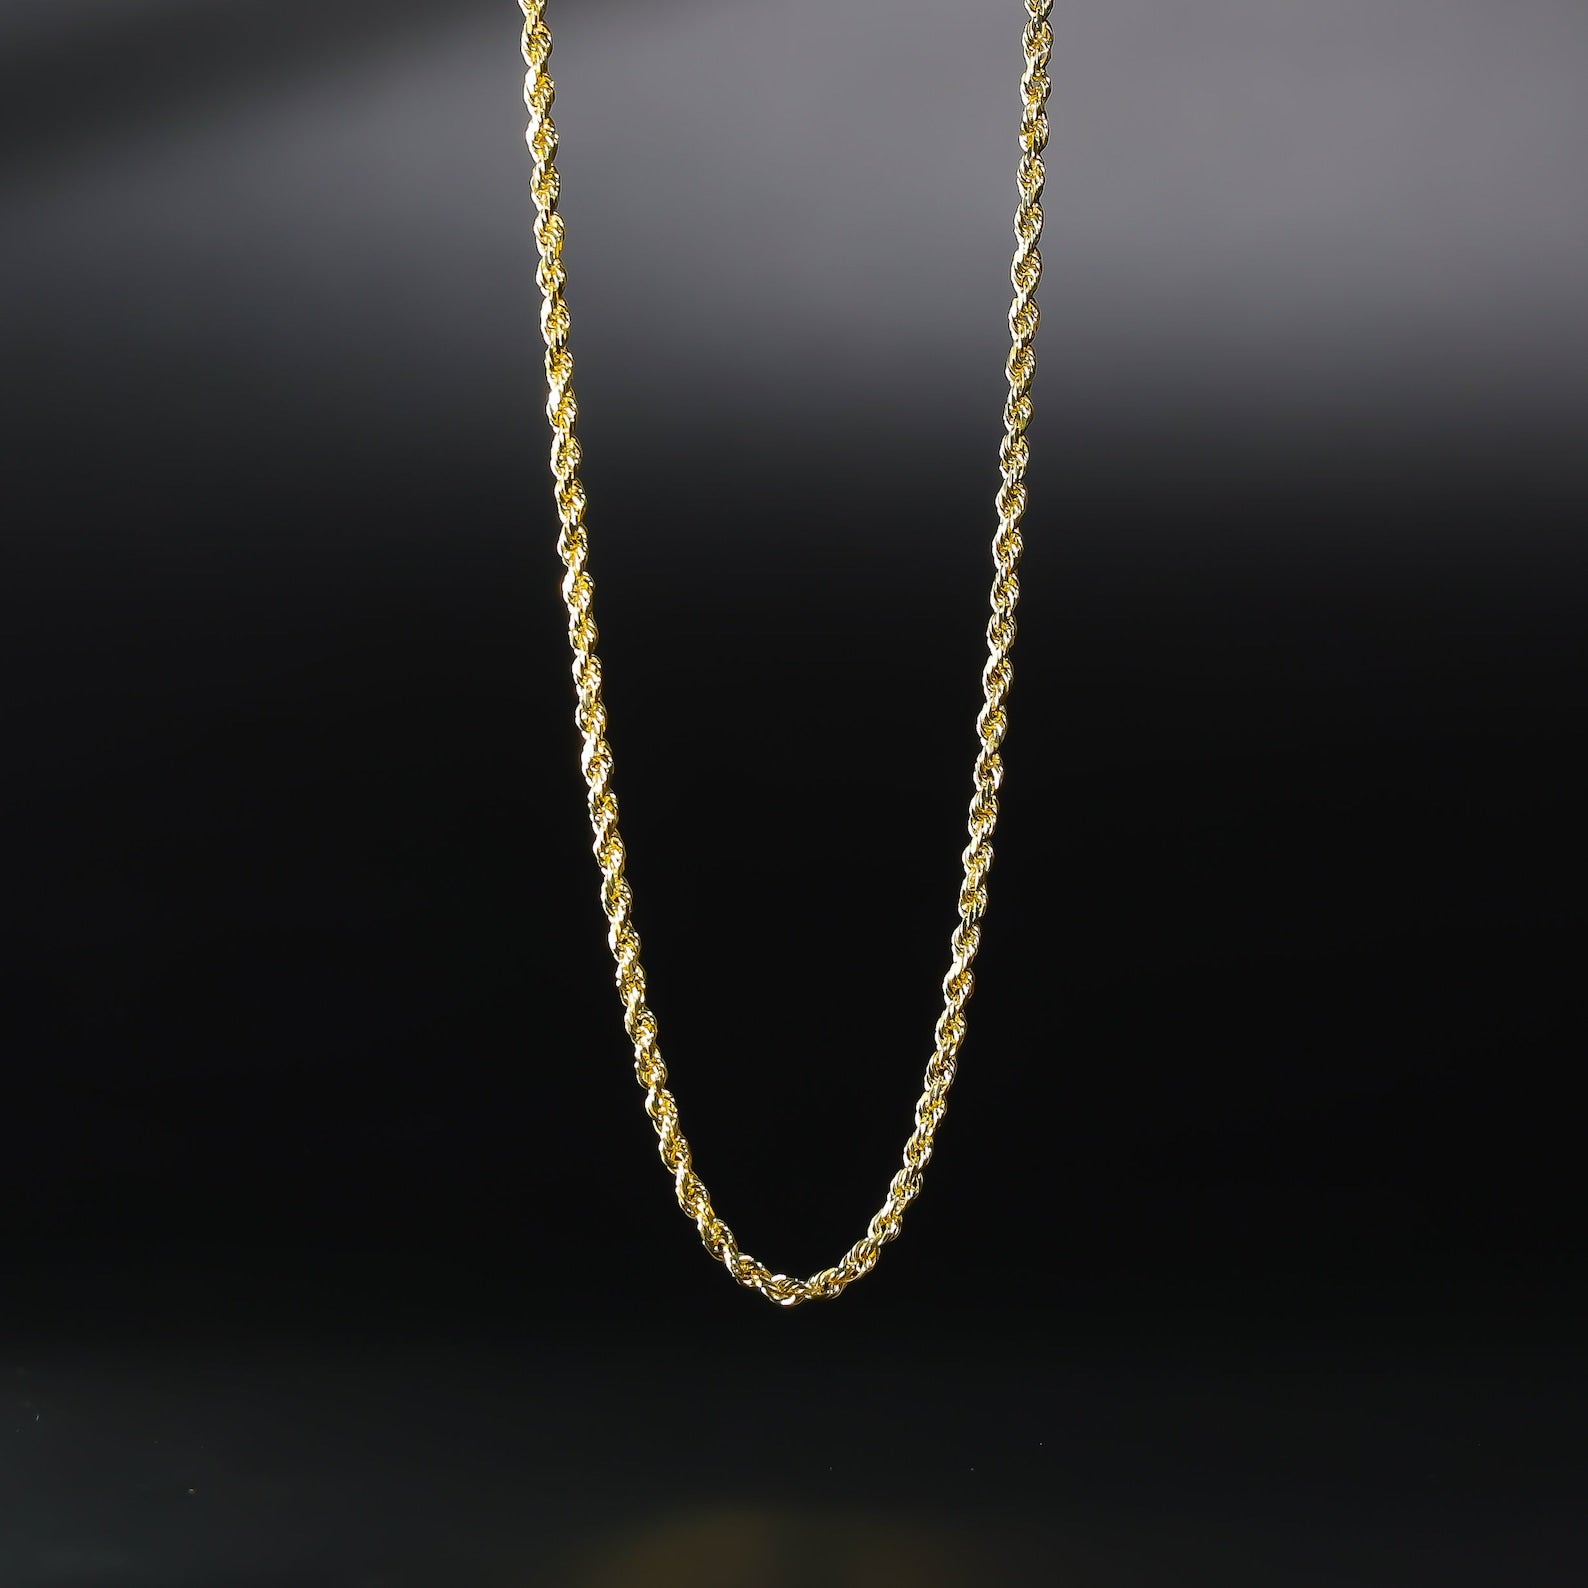 Gold Celtic Cross Pendant Model-122 - Charlie & Co. Jewelry